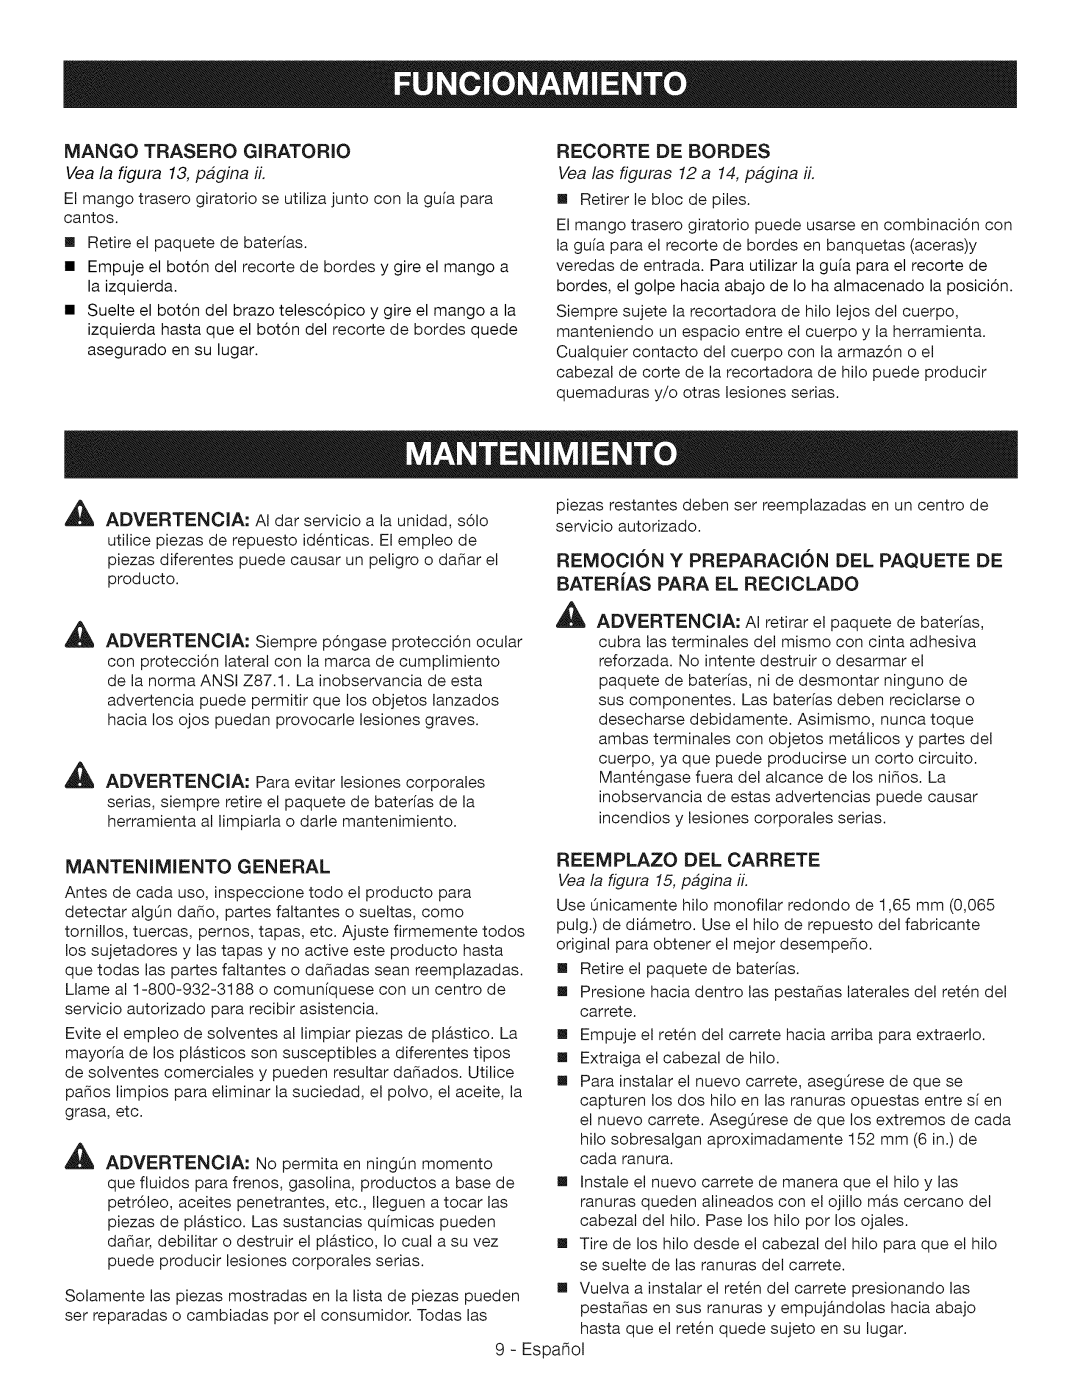 Craftsman 315.CR2000 manual Mango Trasero Giratorio, Recorte De Bordes, Mantenimiento General, Reemplazo Del Carrete 